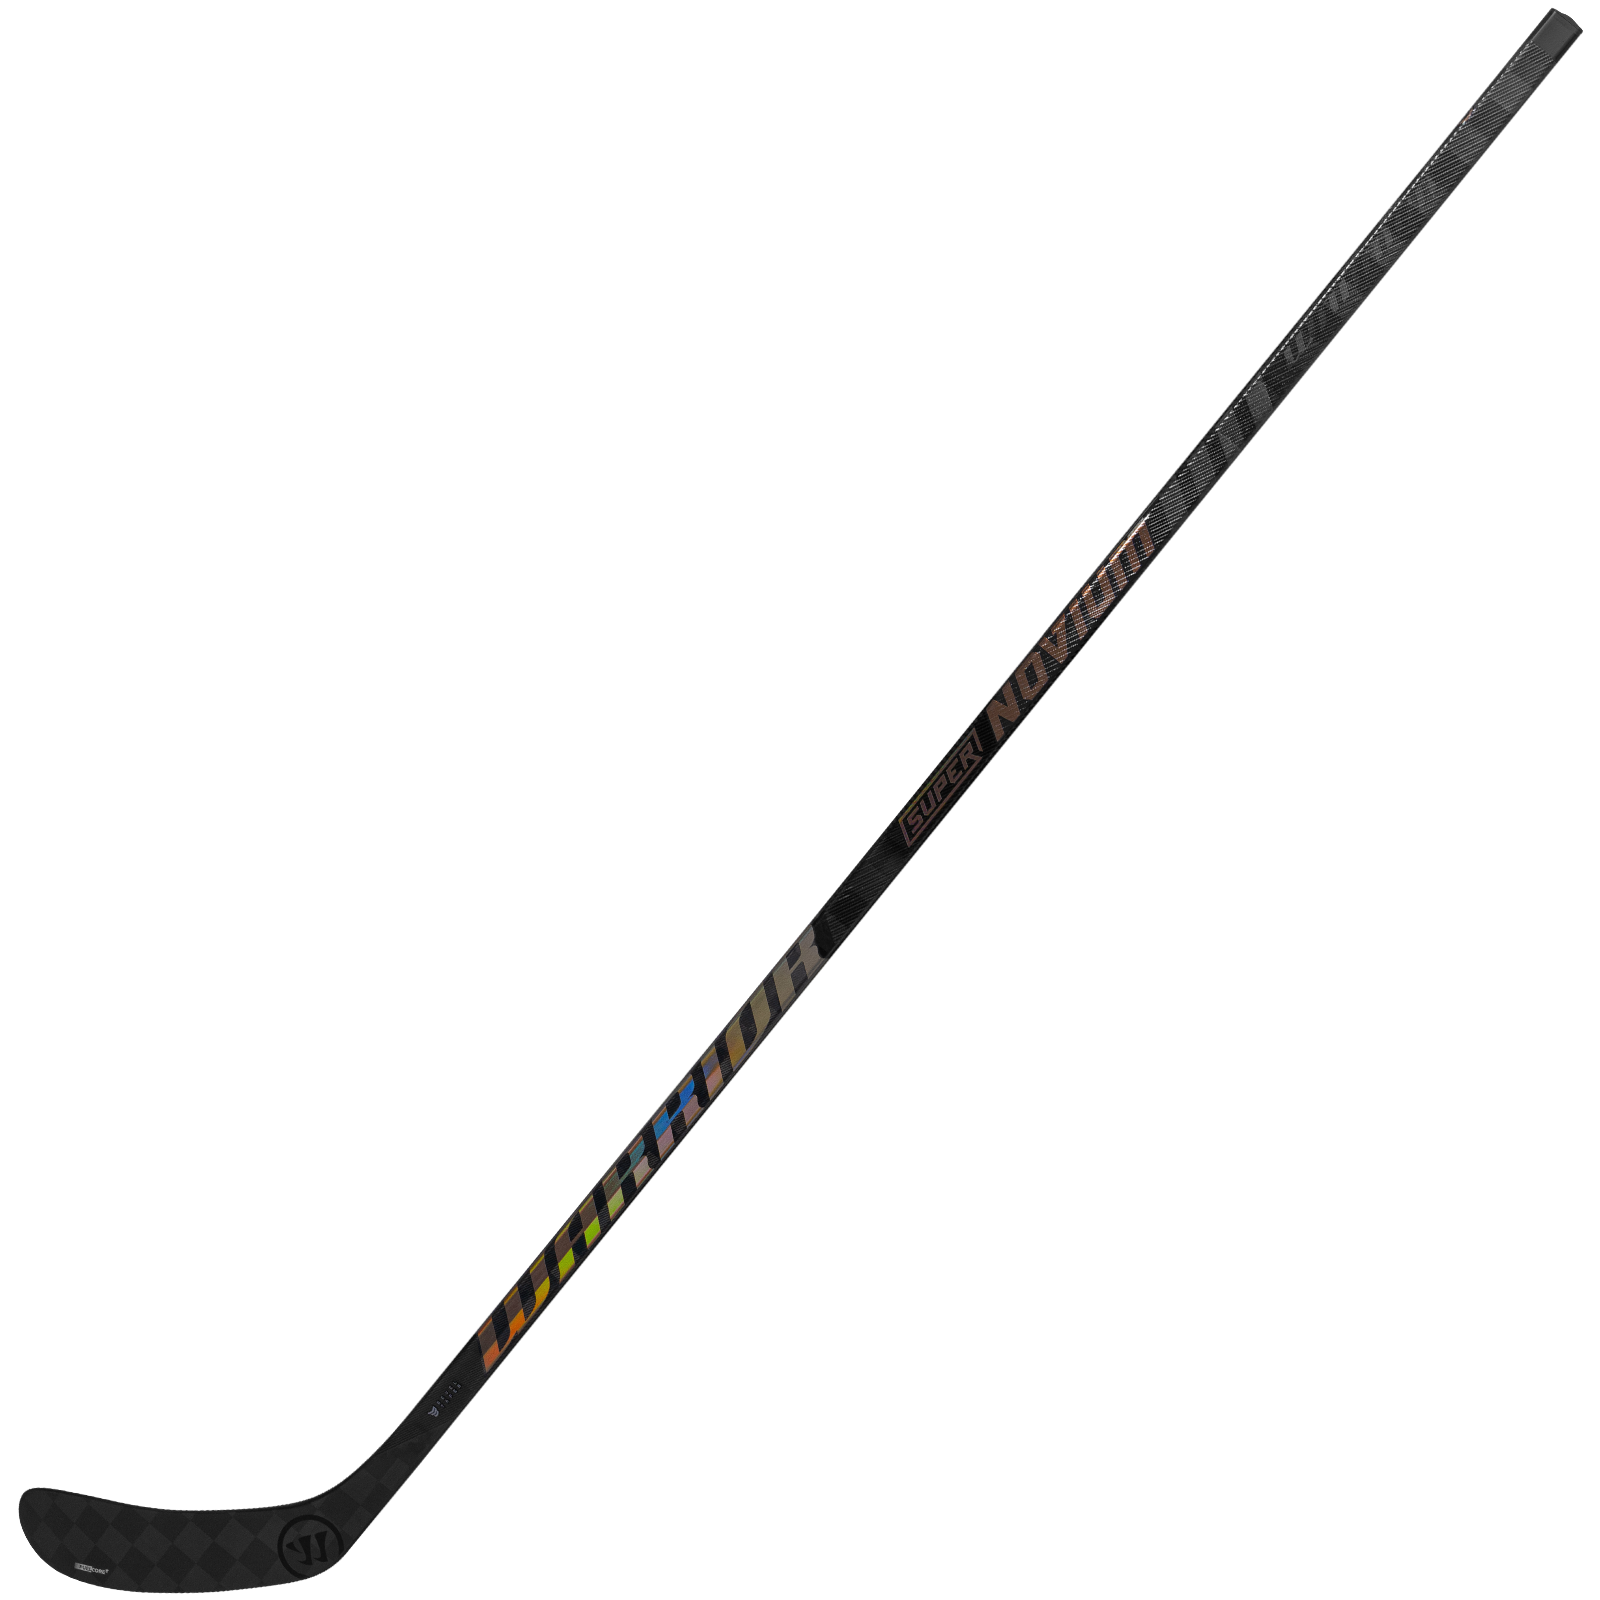 Warrior Super Novium Junior Hockey Stick